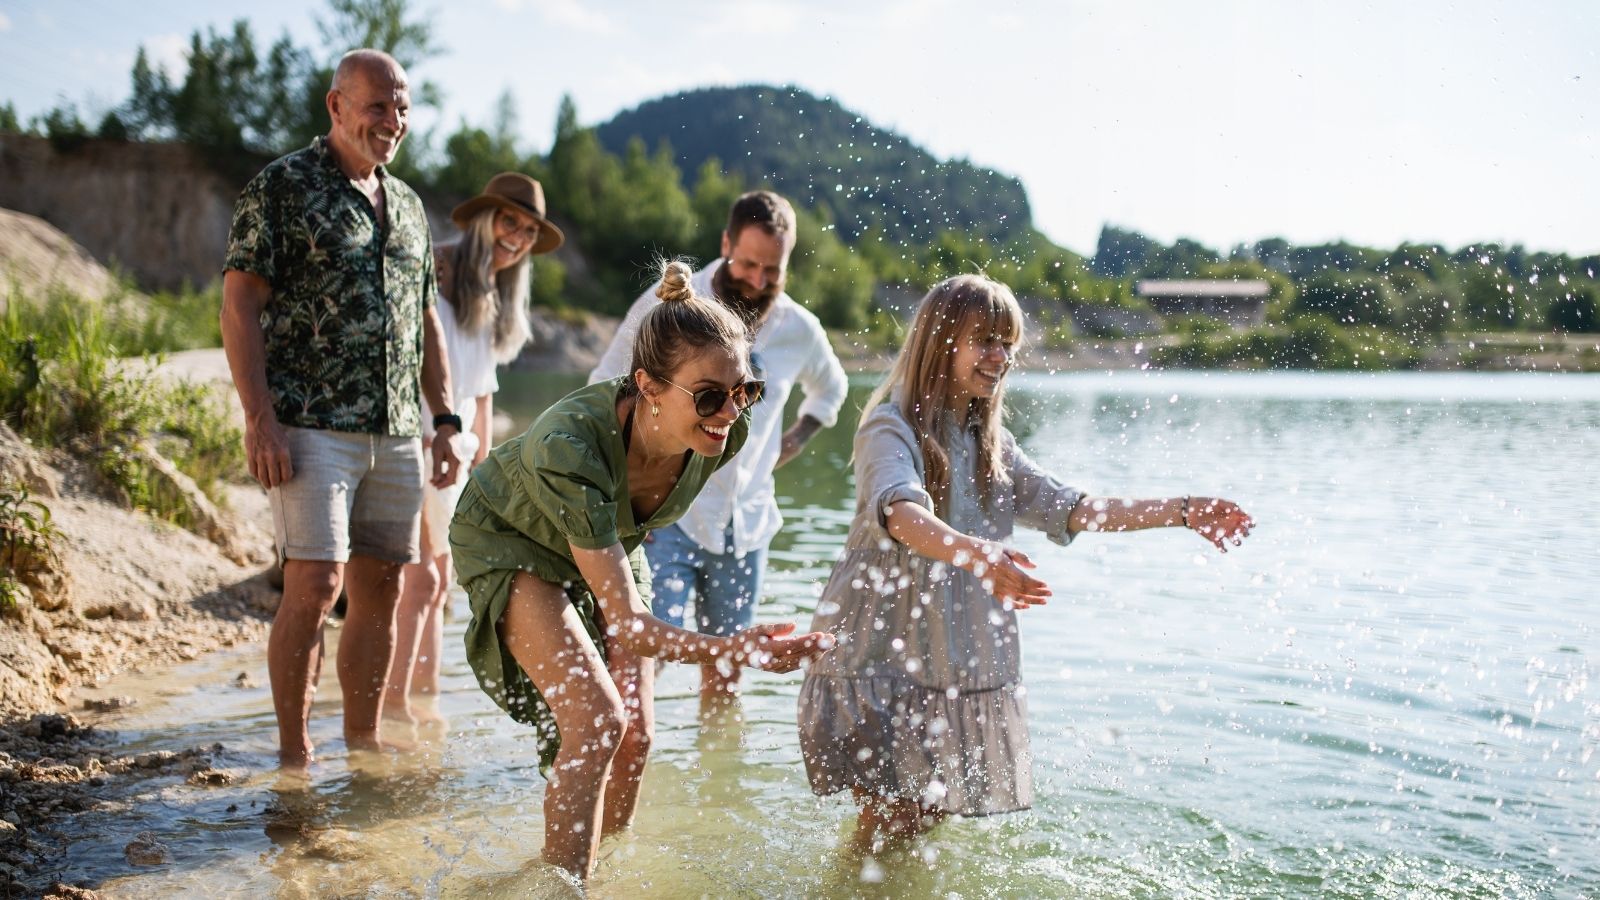 Multigenerational family on walk by lake (Photo: Shutterstock)